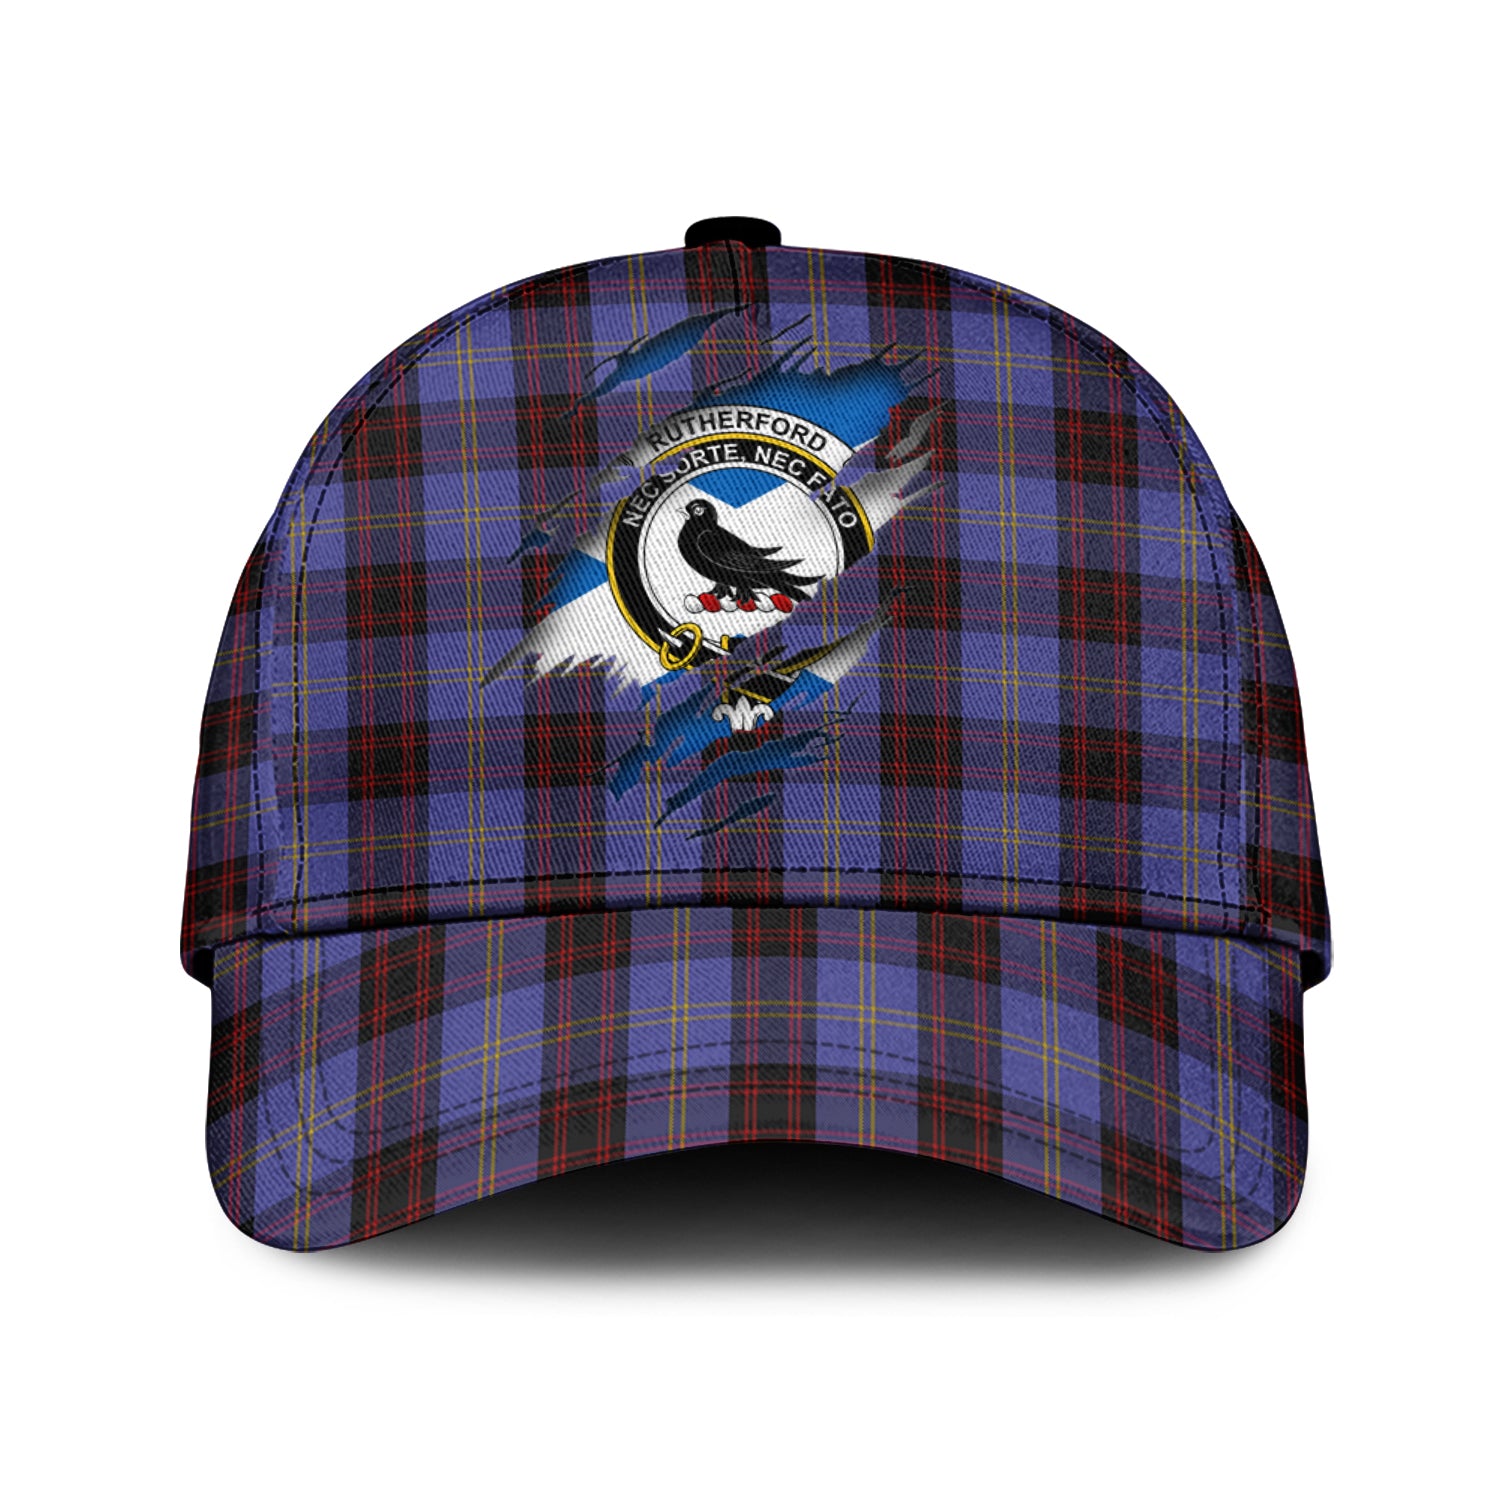 rutherford-tartan-plaid-cap-family-crest-in-me-style-tartan-baseball-cap